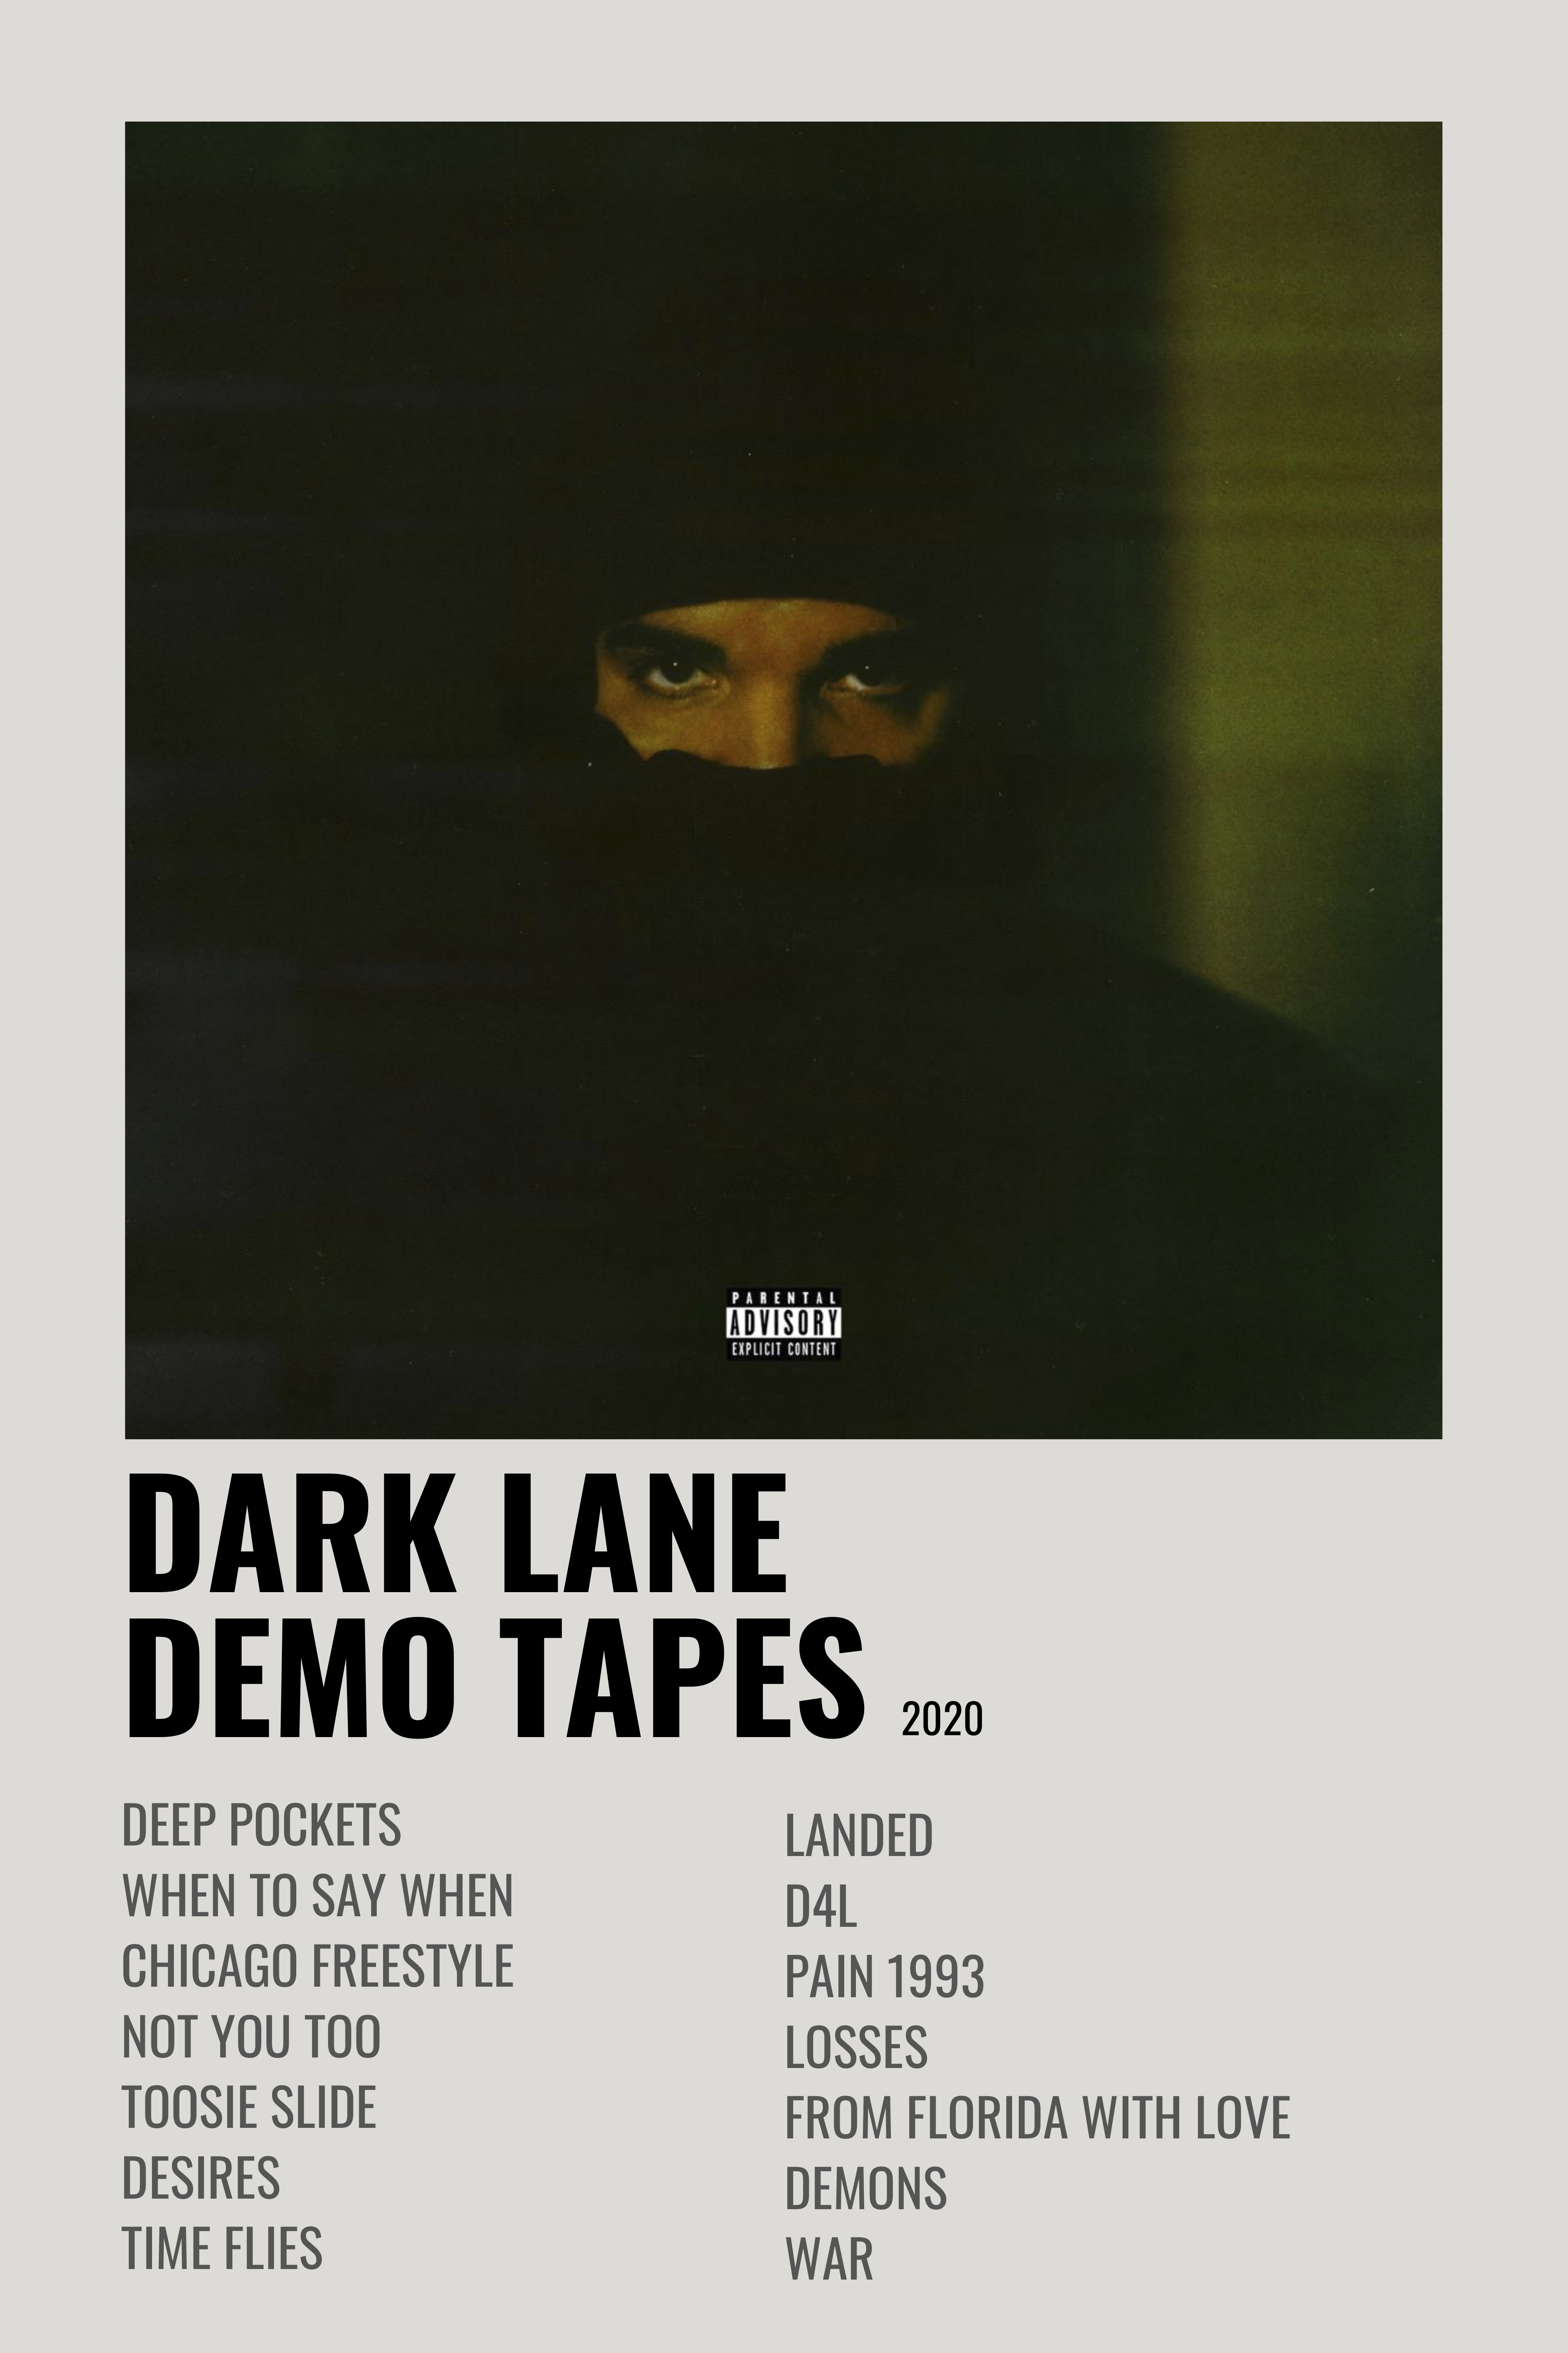 Drake Lane Demo Tapes. Drake album cover, Music poster ideas, Drakes album